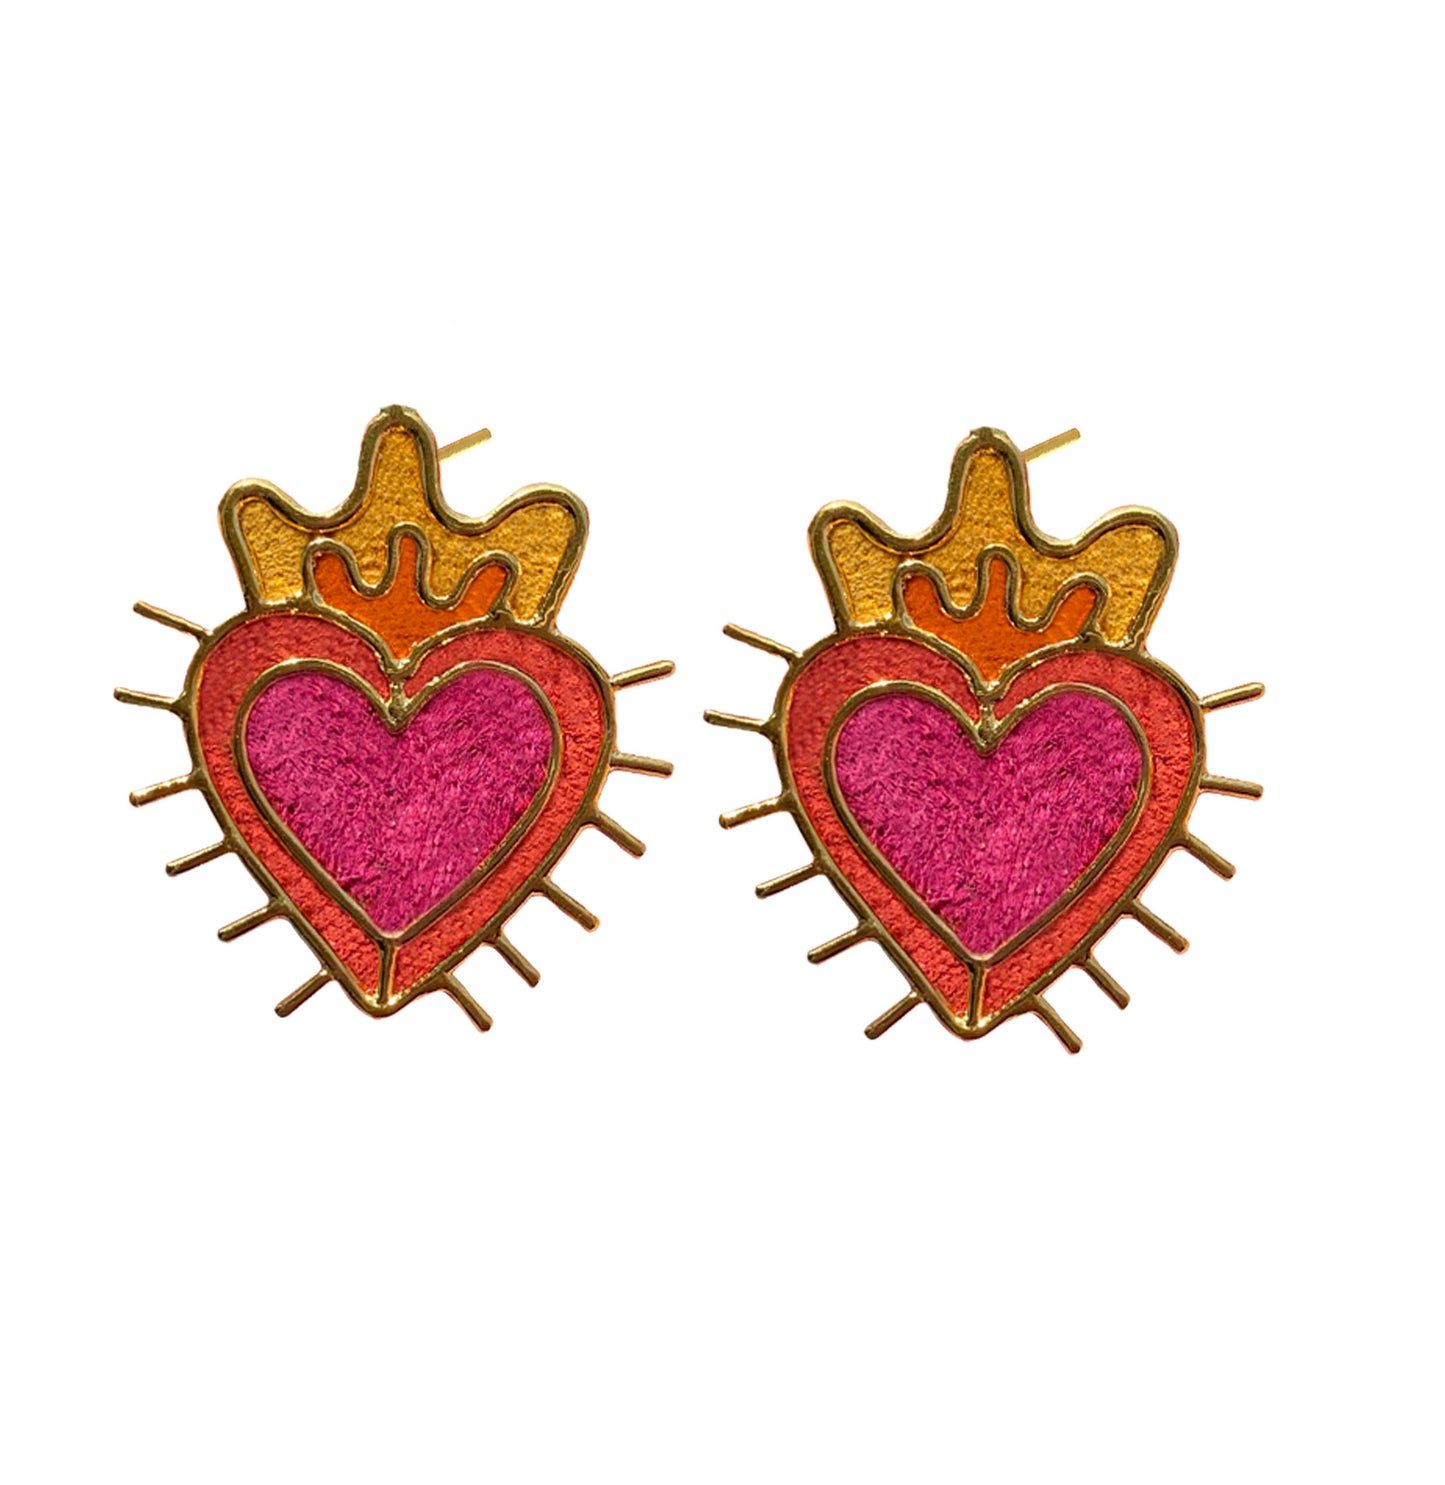 Studs Mini Sagrado Corazón I Earrings by Amulettos